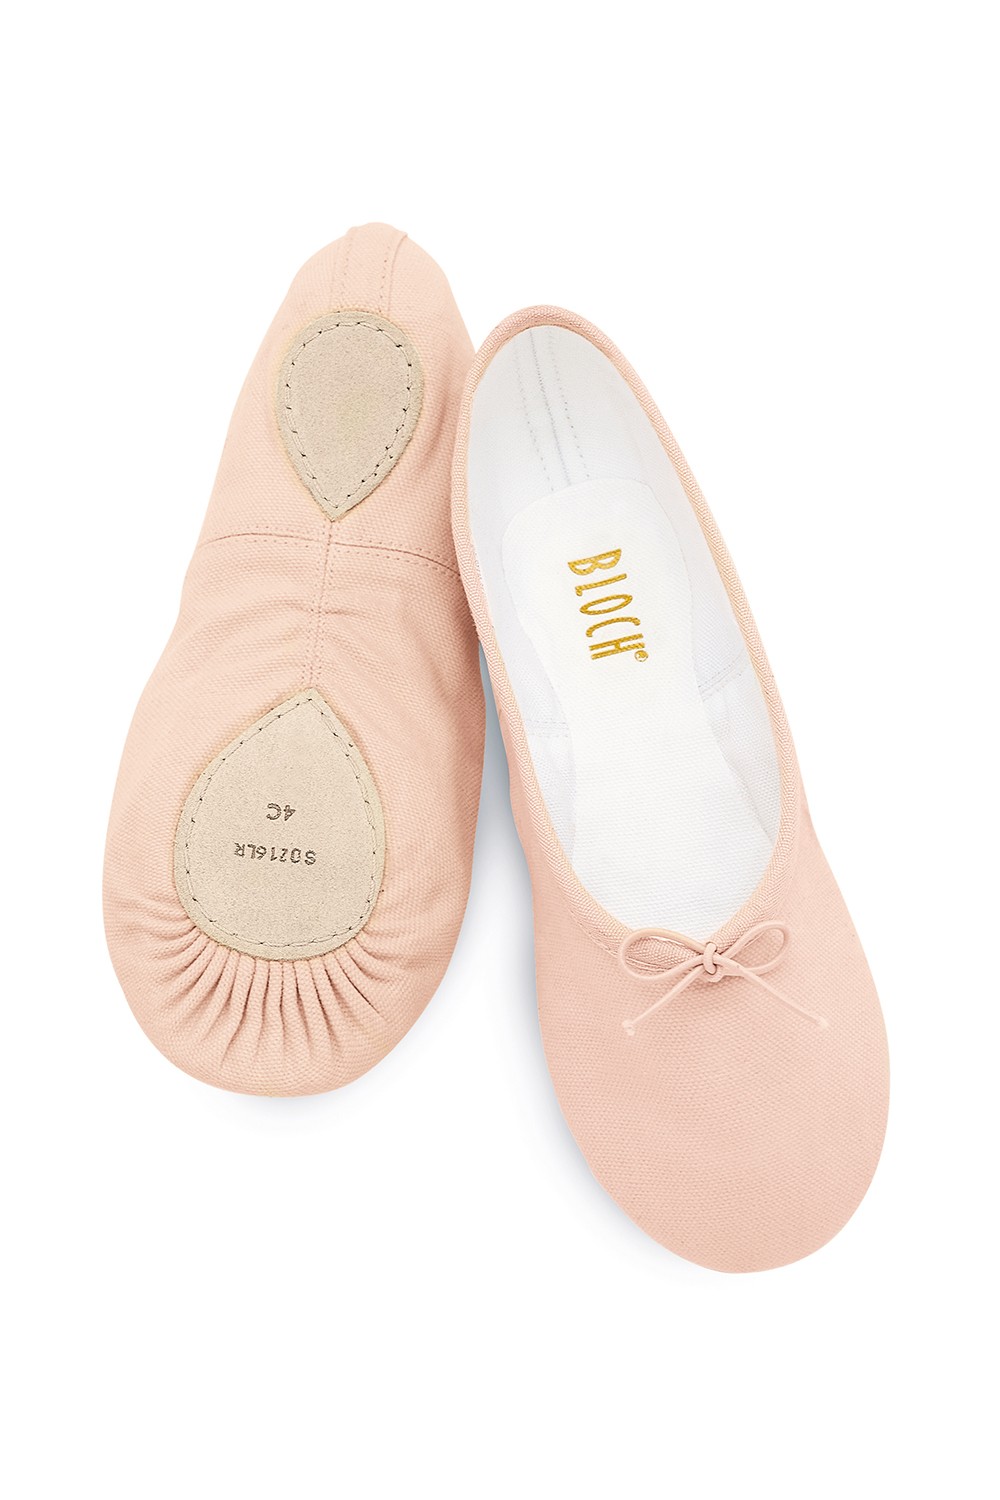 BLOCH® Soft Ballet Shoes - BLOCH® US Store